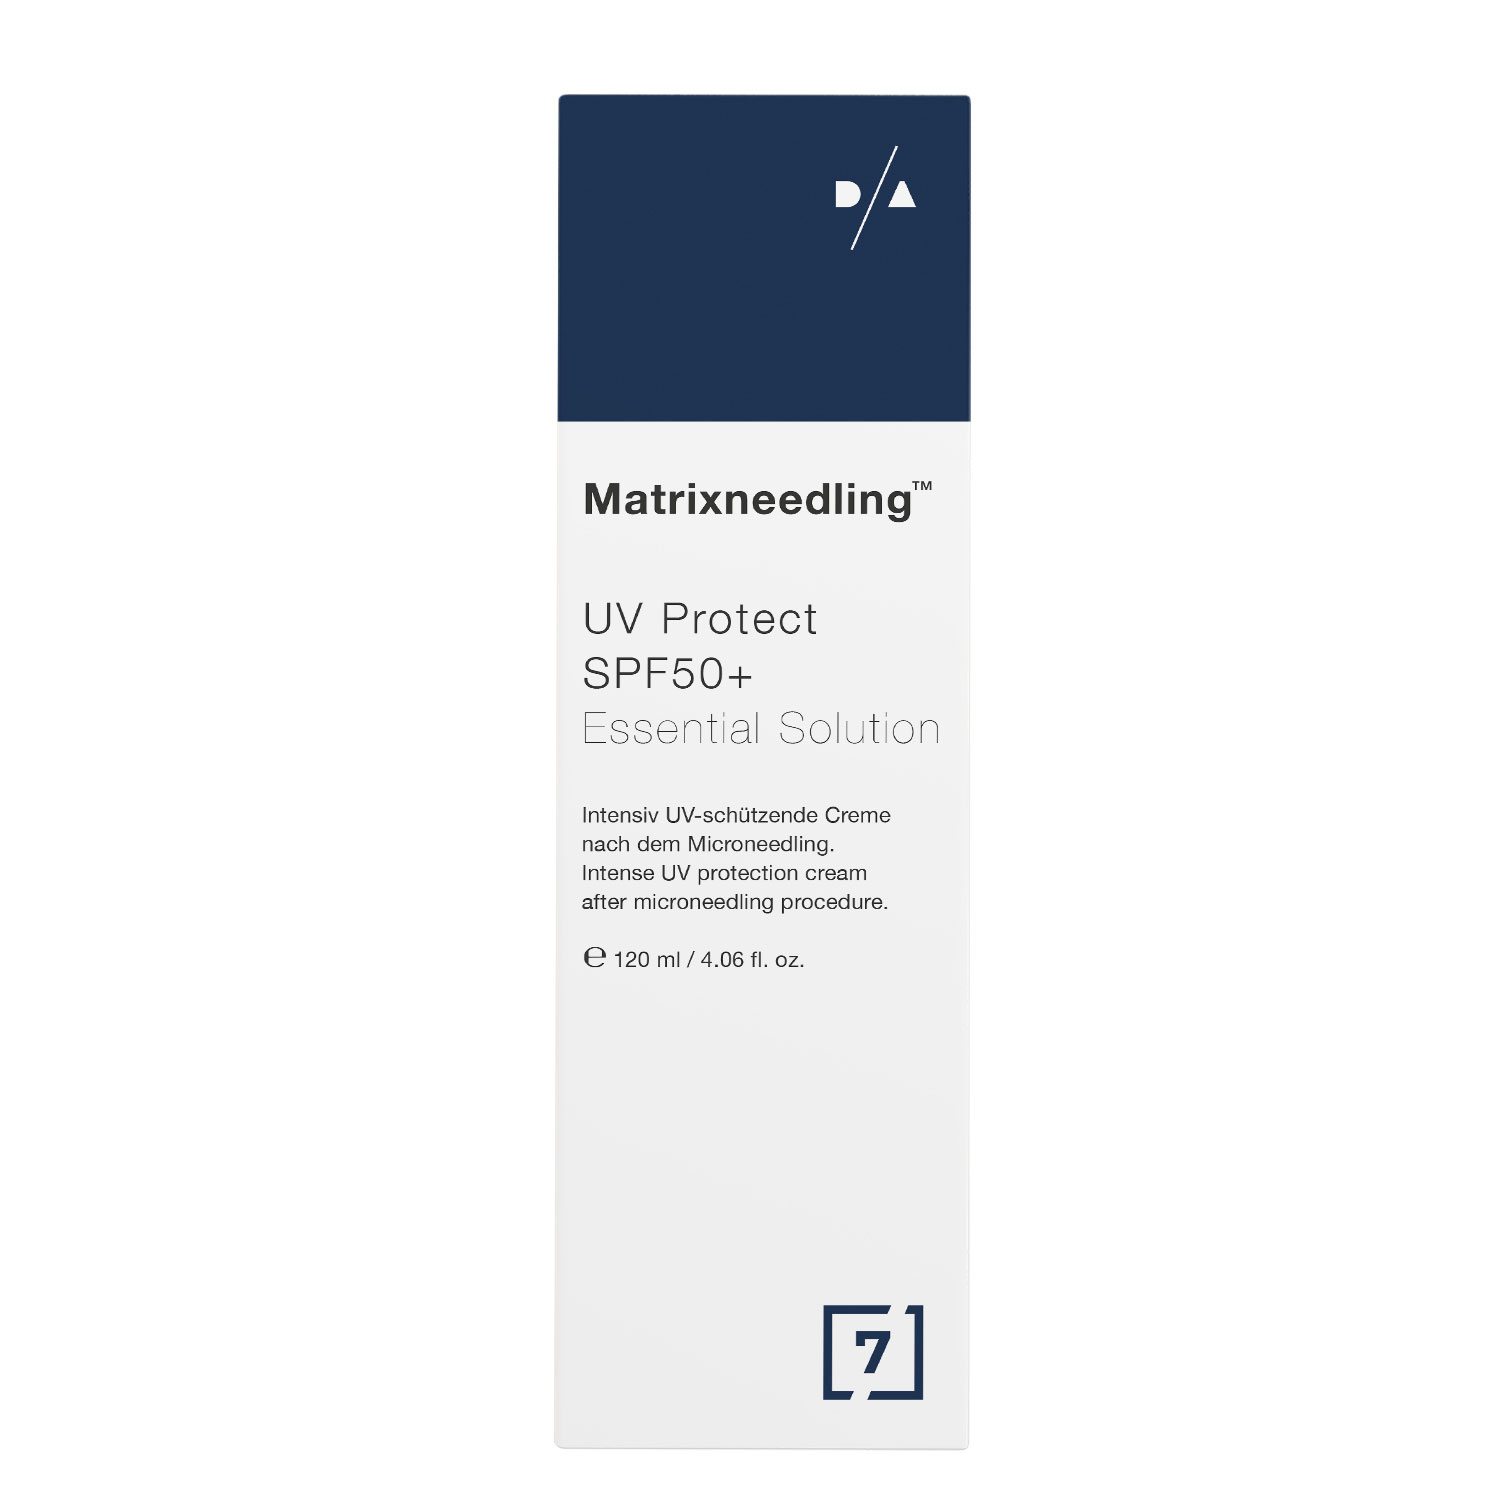 D/A Matrixneedling™ UV Protect SPF50+